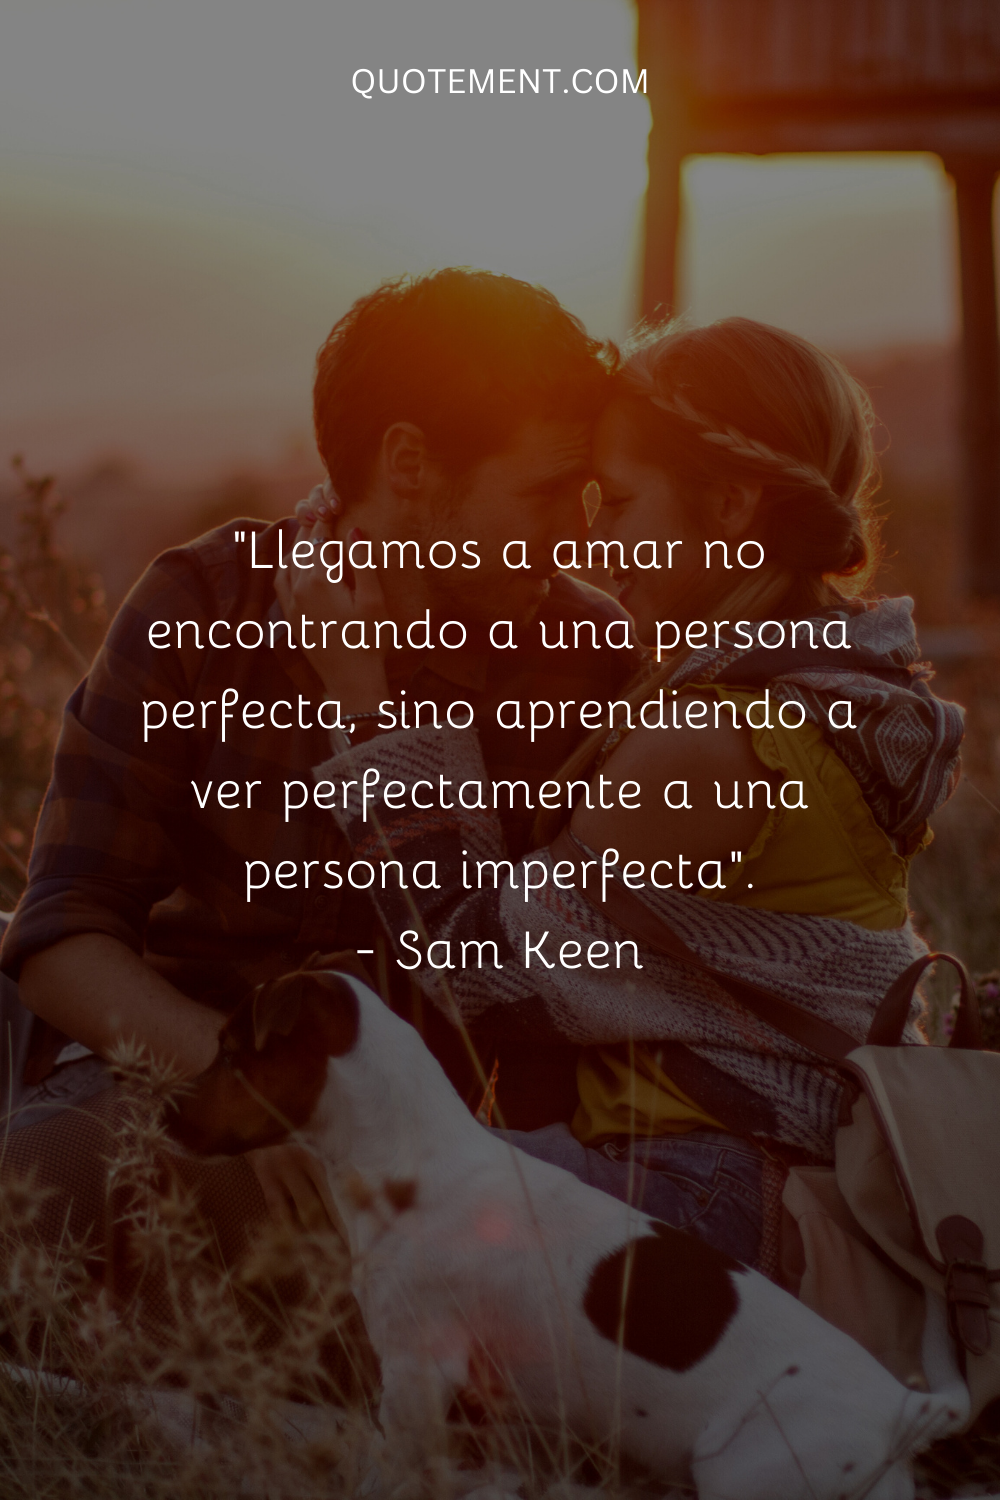 "Llegamos a amar no encontrando a una persona perfecta, sino aprendiendo a ver perfectamente a una persona imperfecta". - Sam Keen